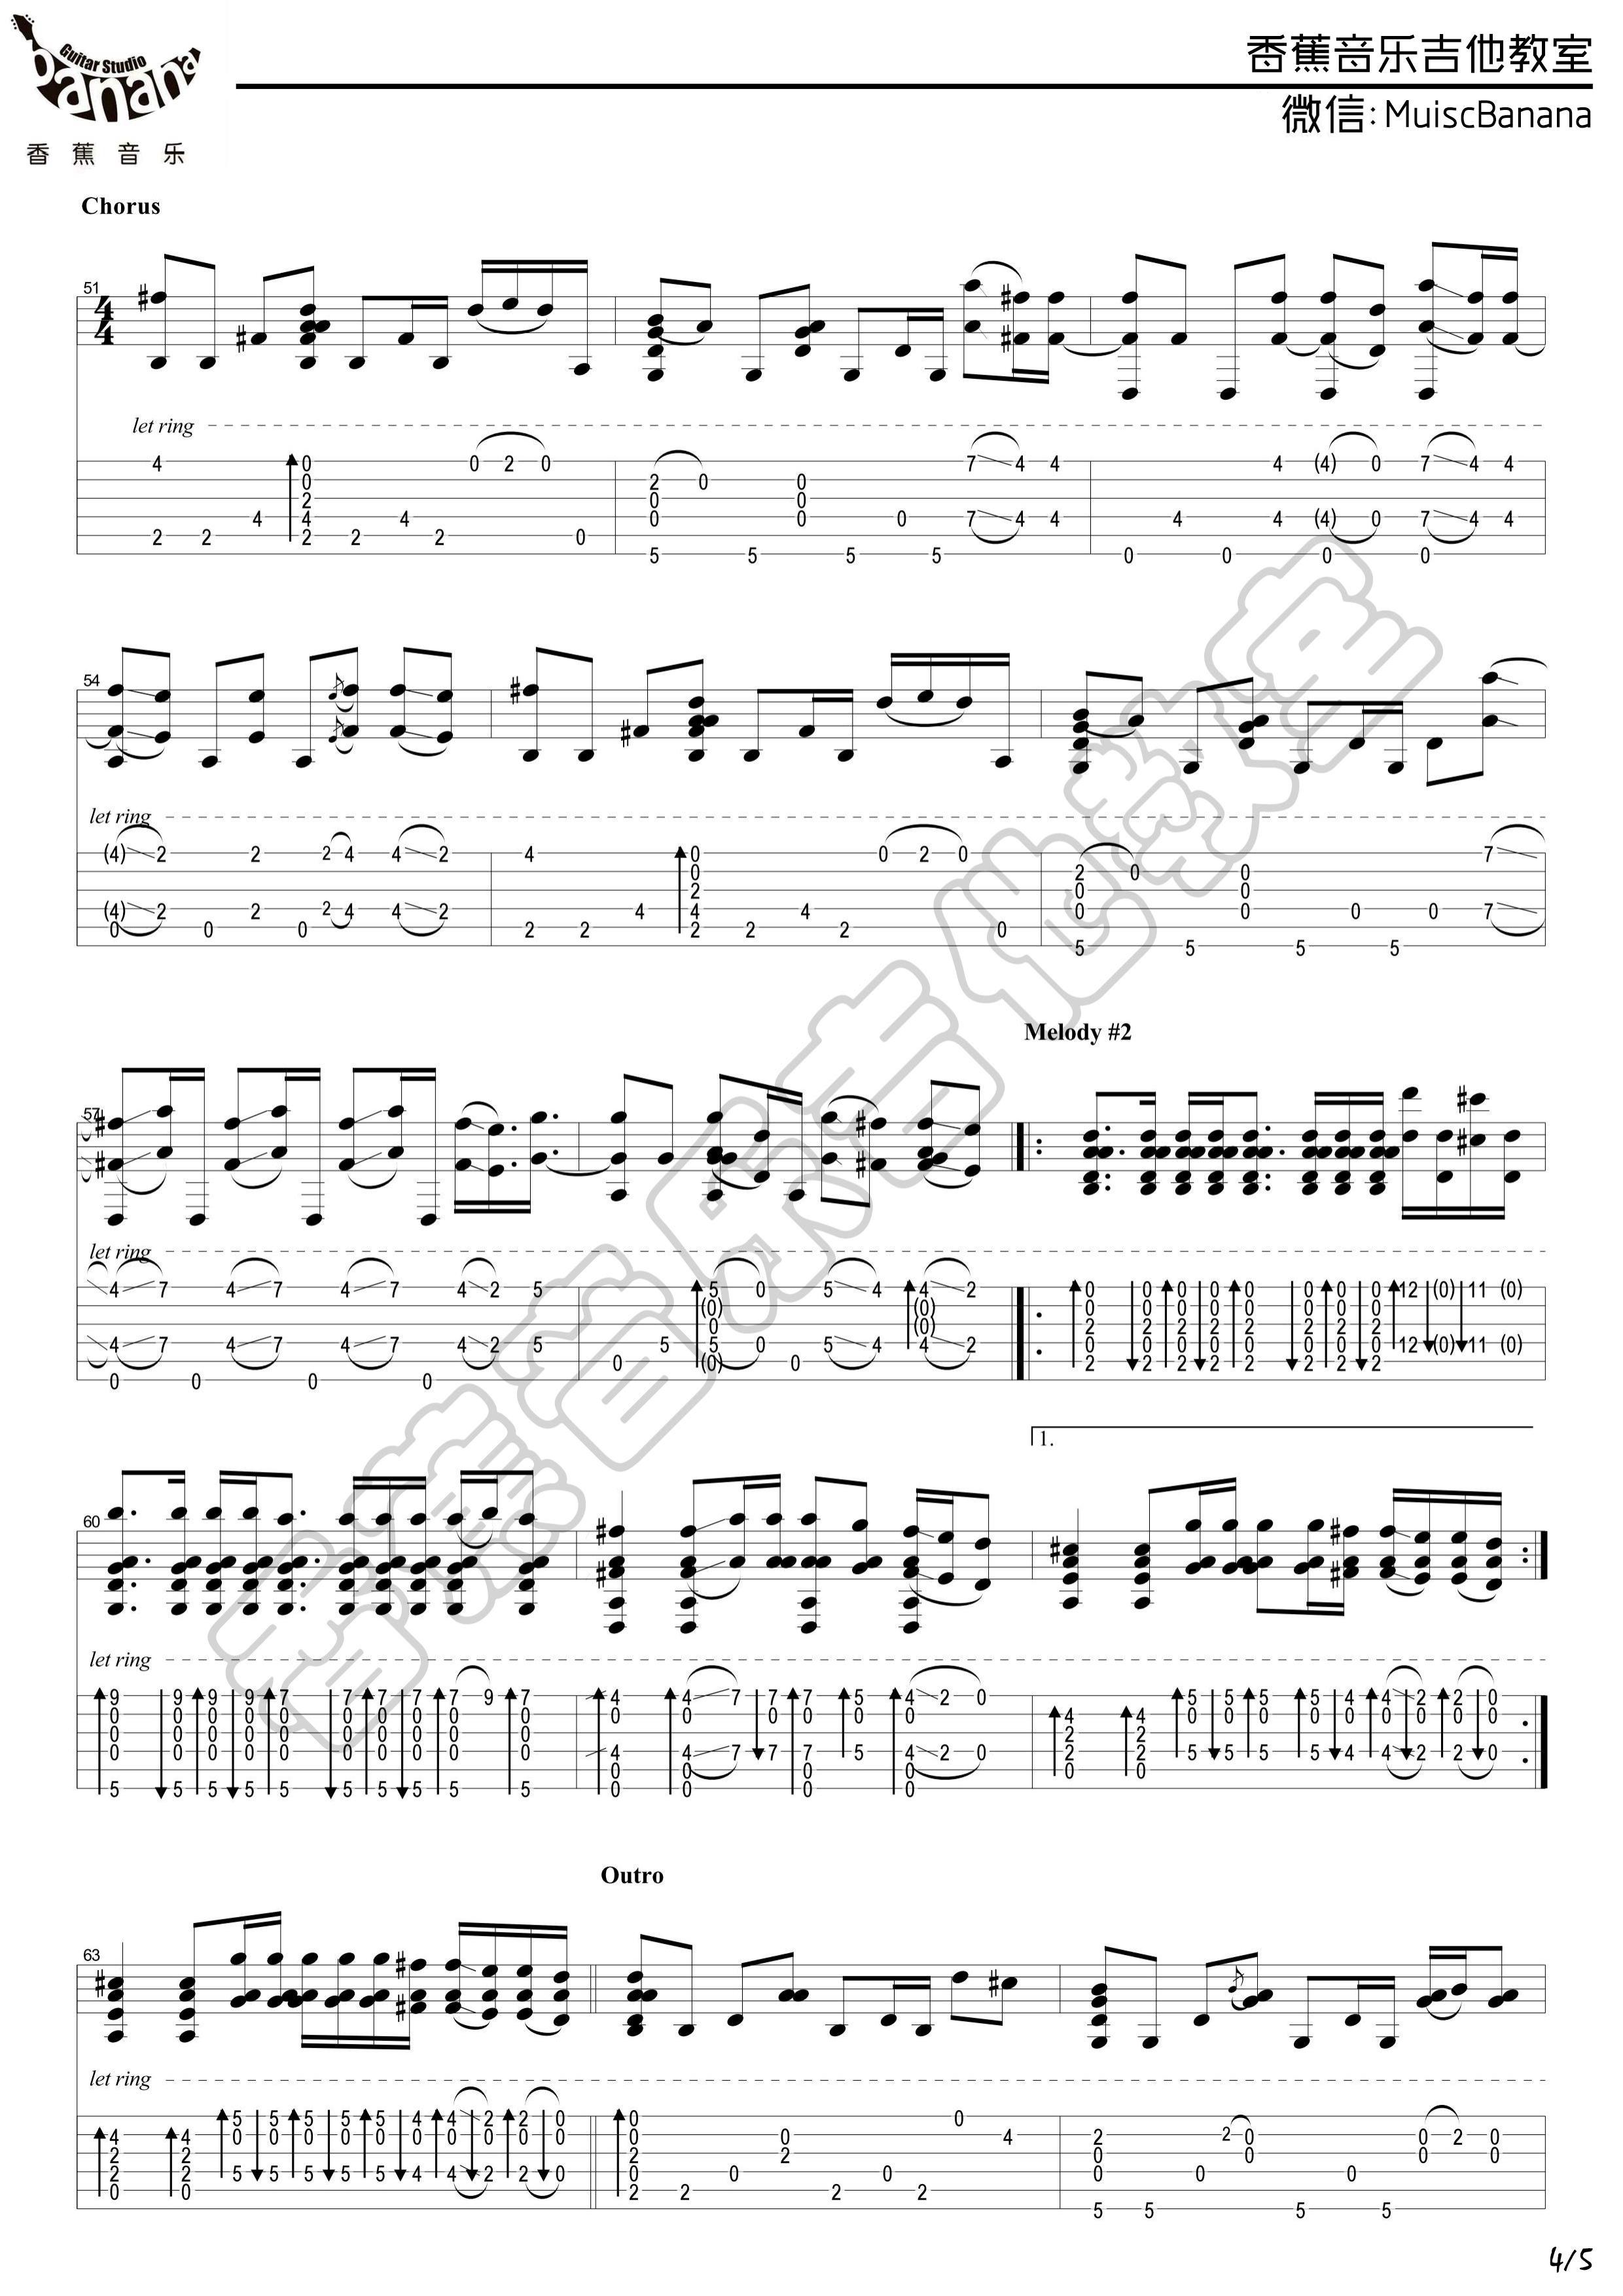 peaches吉他谱简单版,pes吉他简,吉他简单版简化版(第17页)_大山谷图库